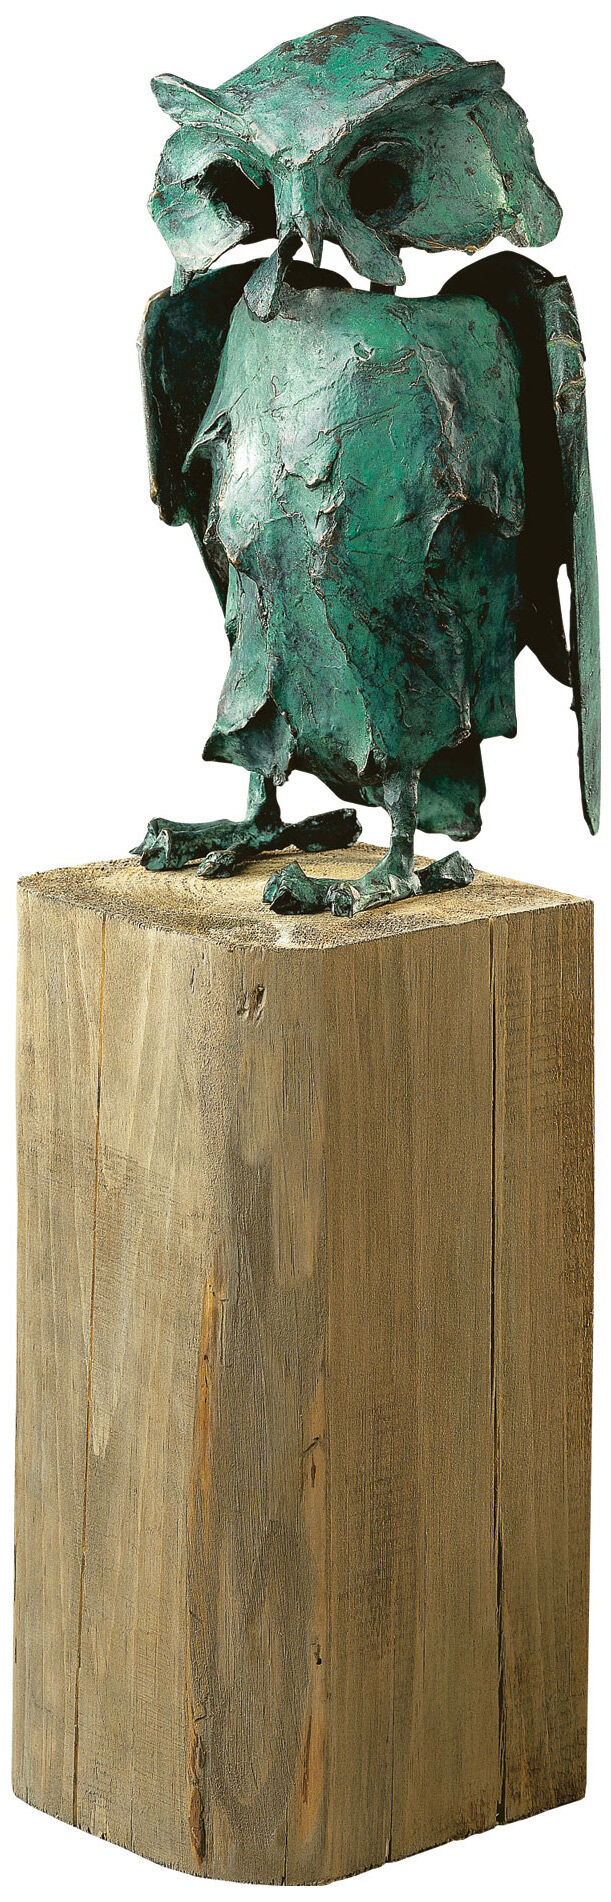 Sculpture "Owl" (1995), bronze by Dieter Finke